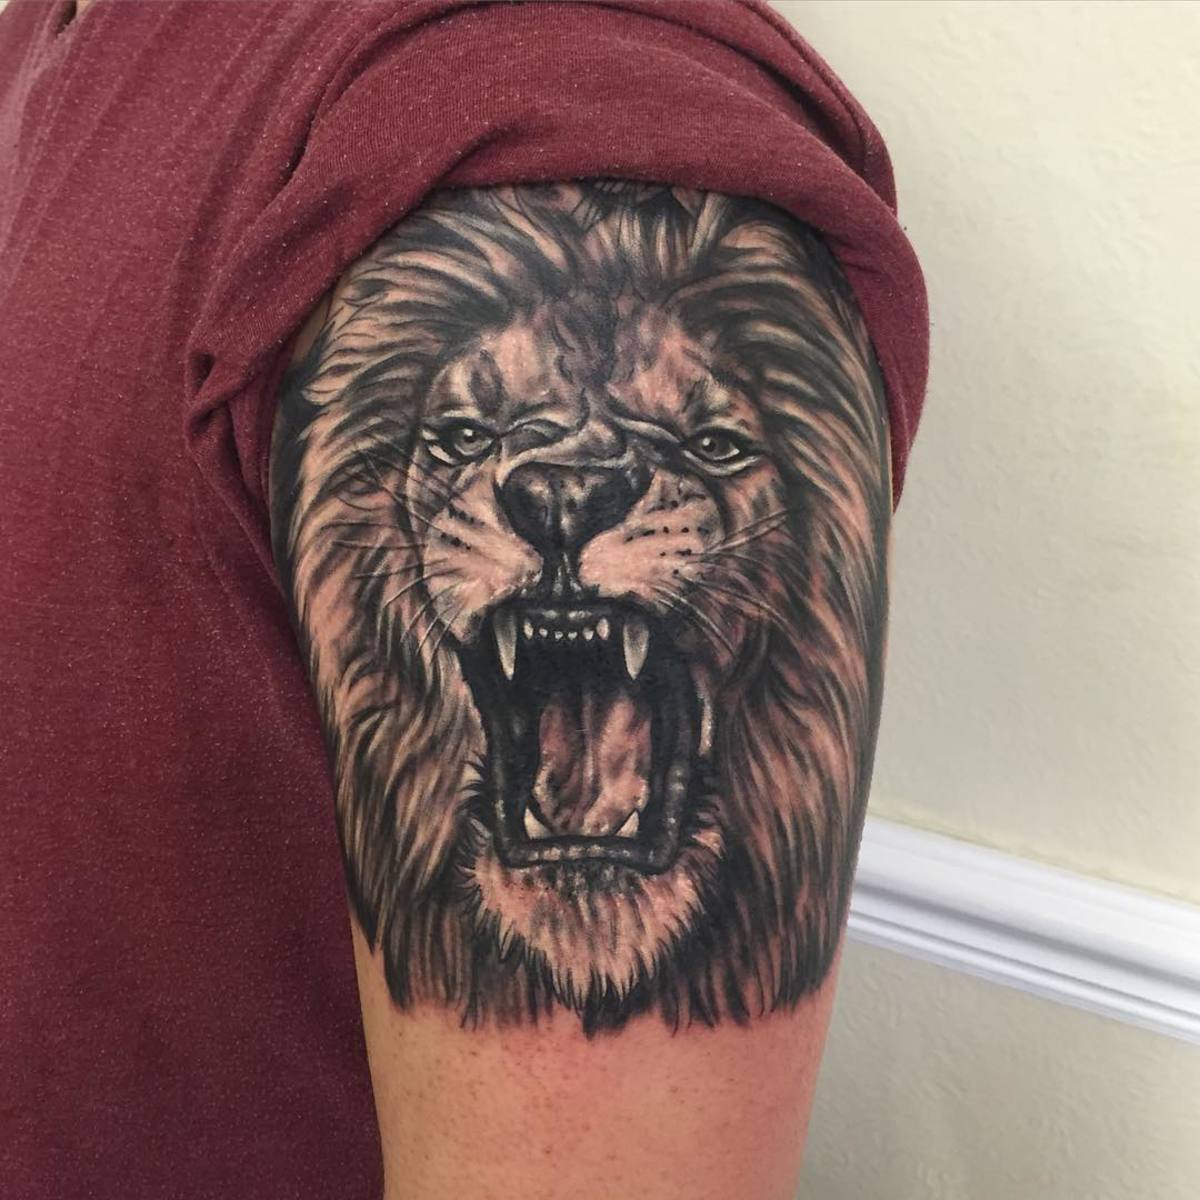 Waterproof Temporary Tattoo Sticker beast animal bear wolf lion compass  Tattoos realistic Body Art Arm Fake